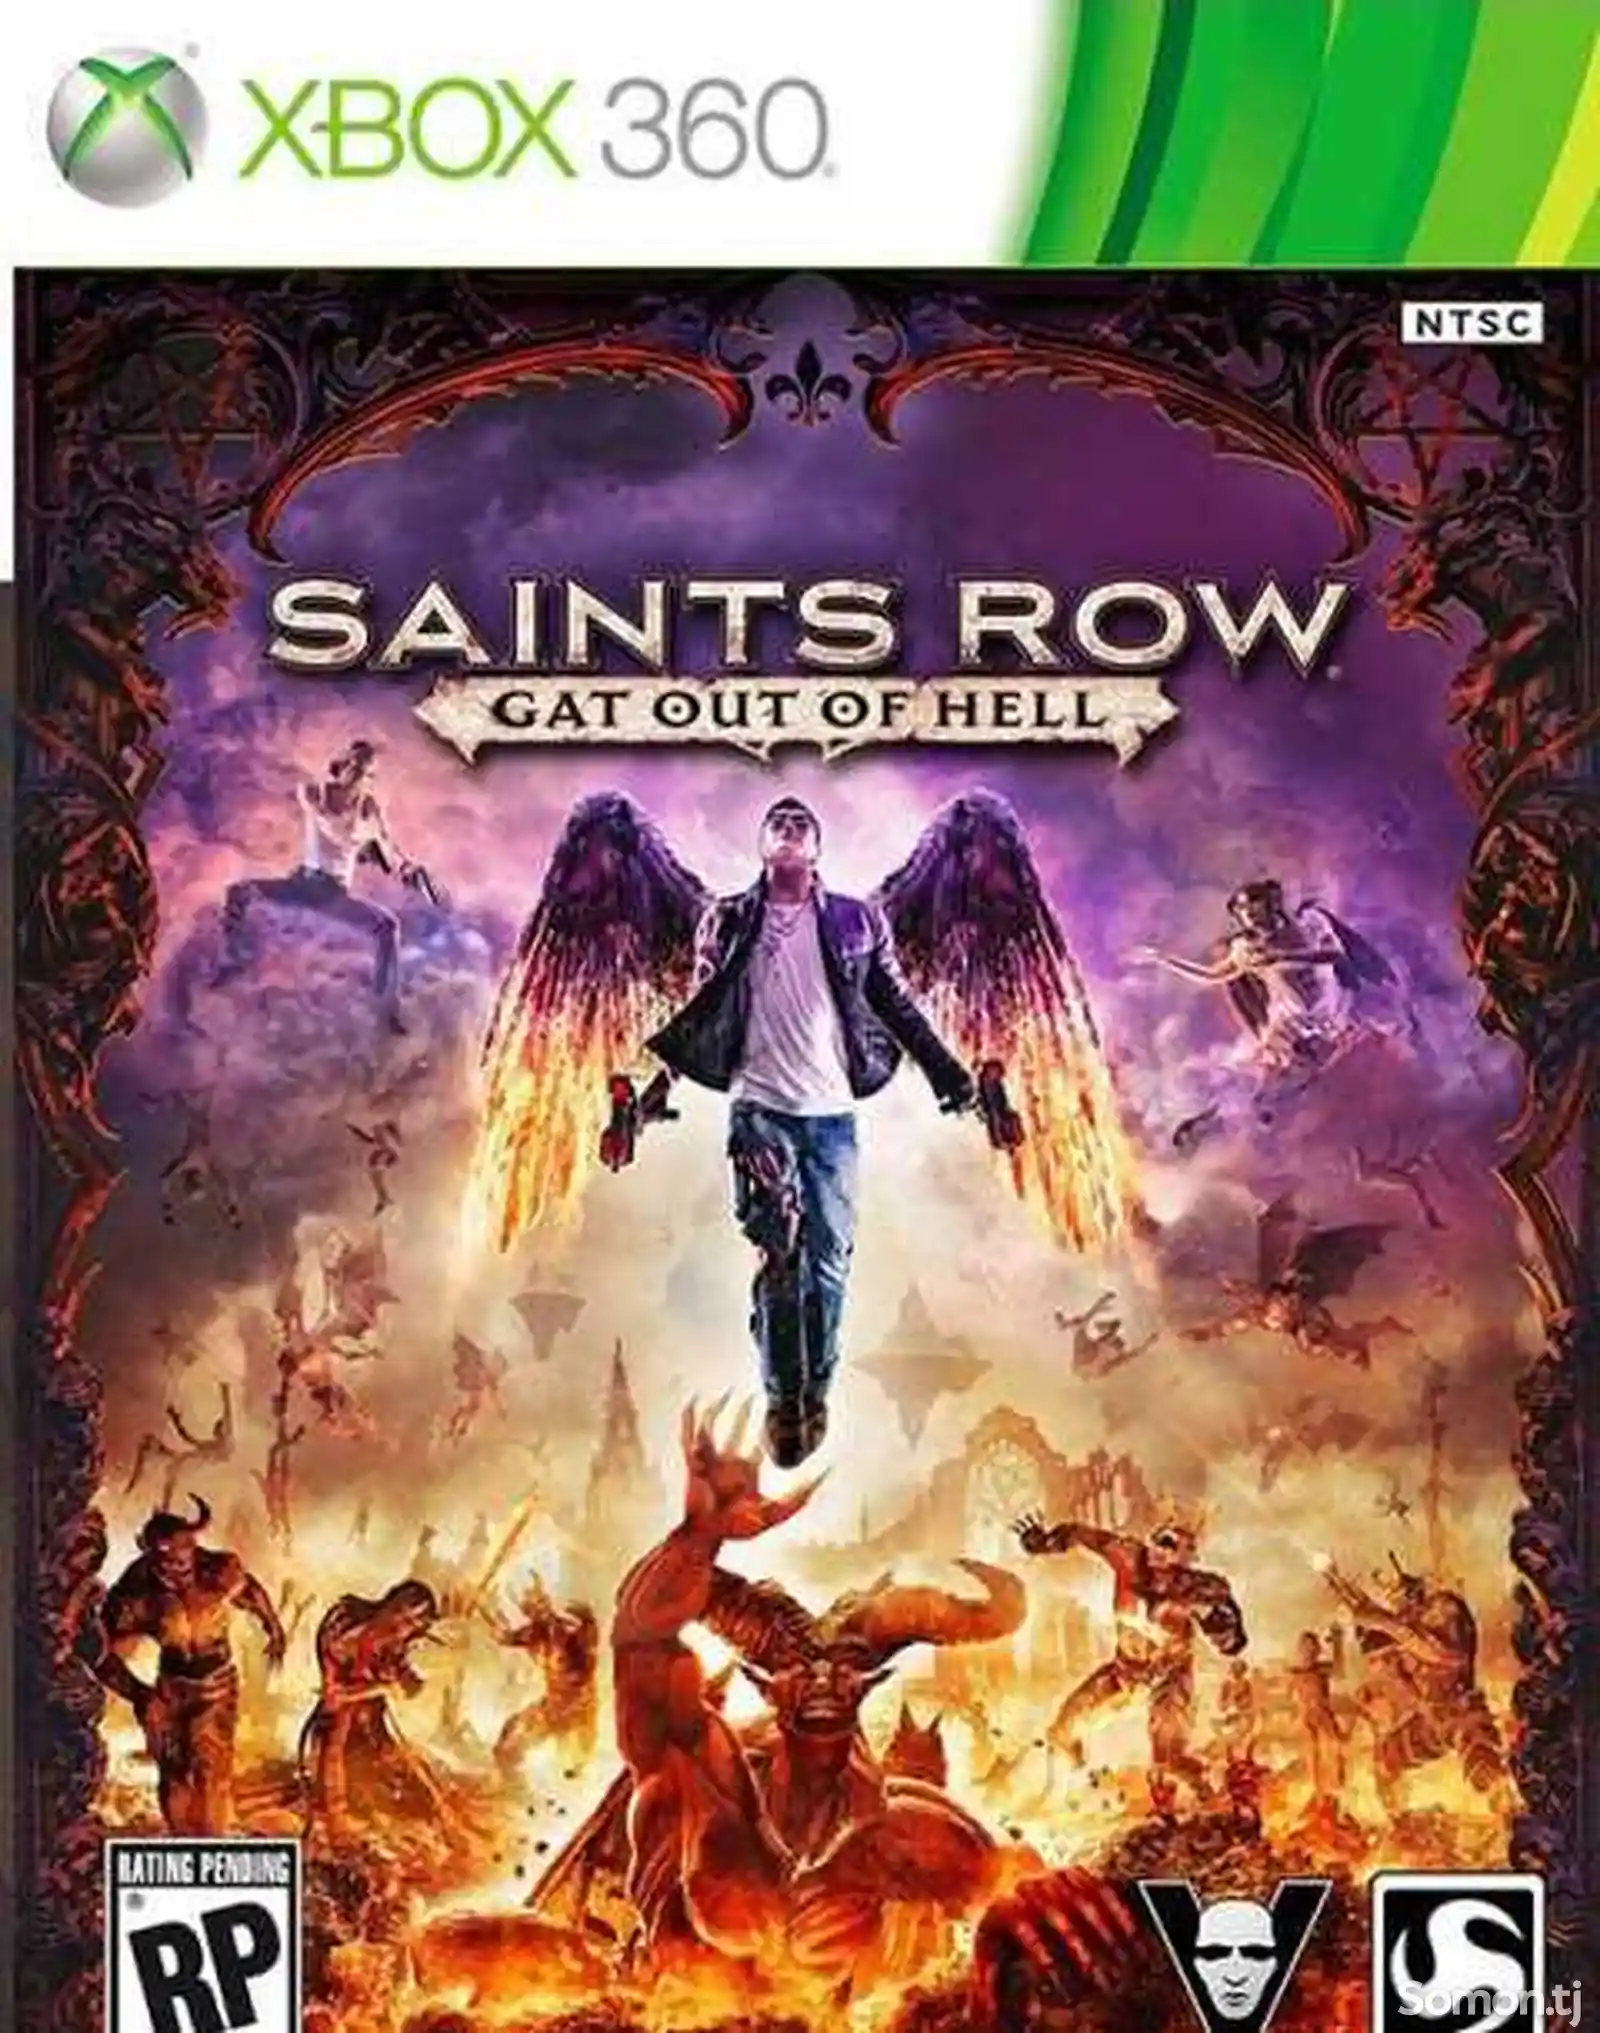 Игра Saints row gat out of hell для прошитых Xbox 360